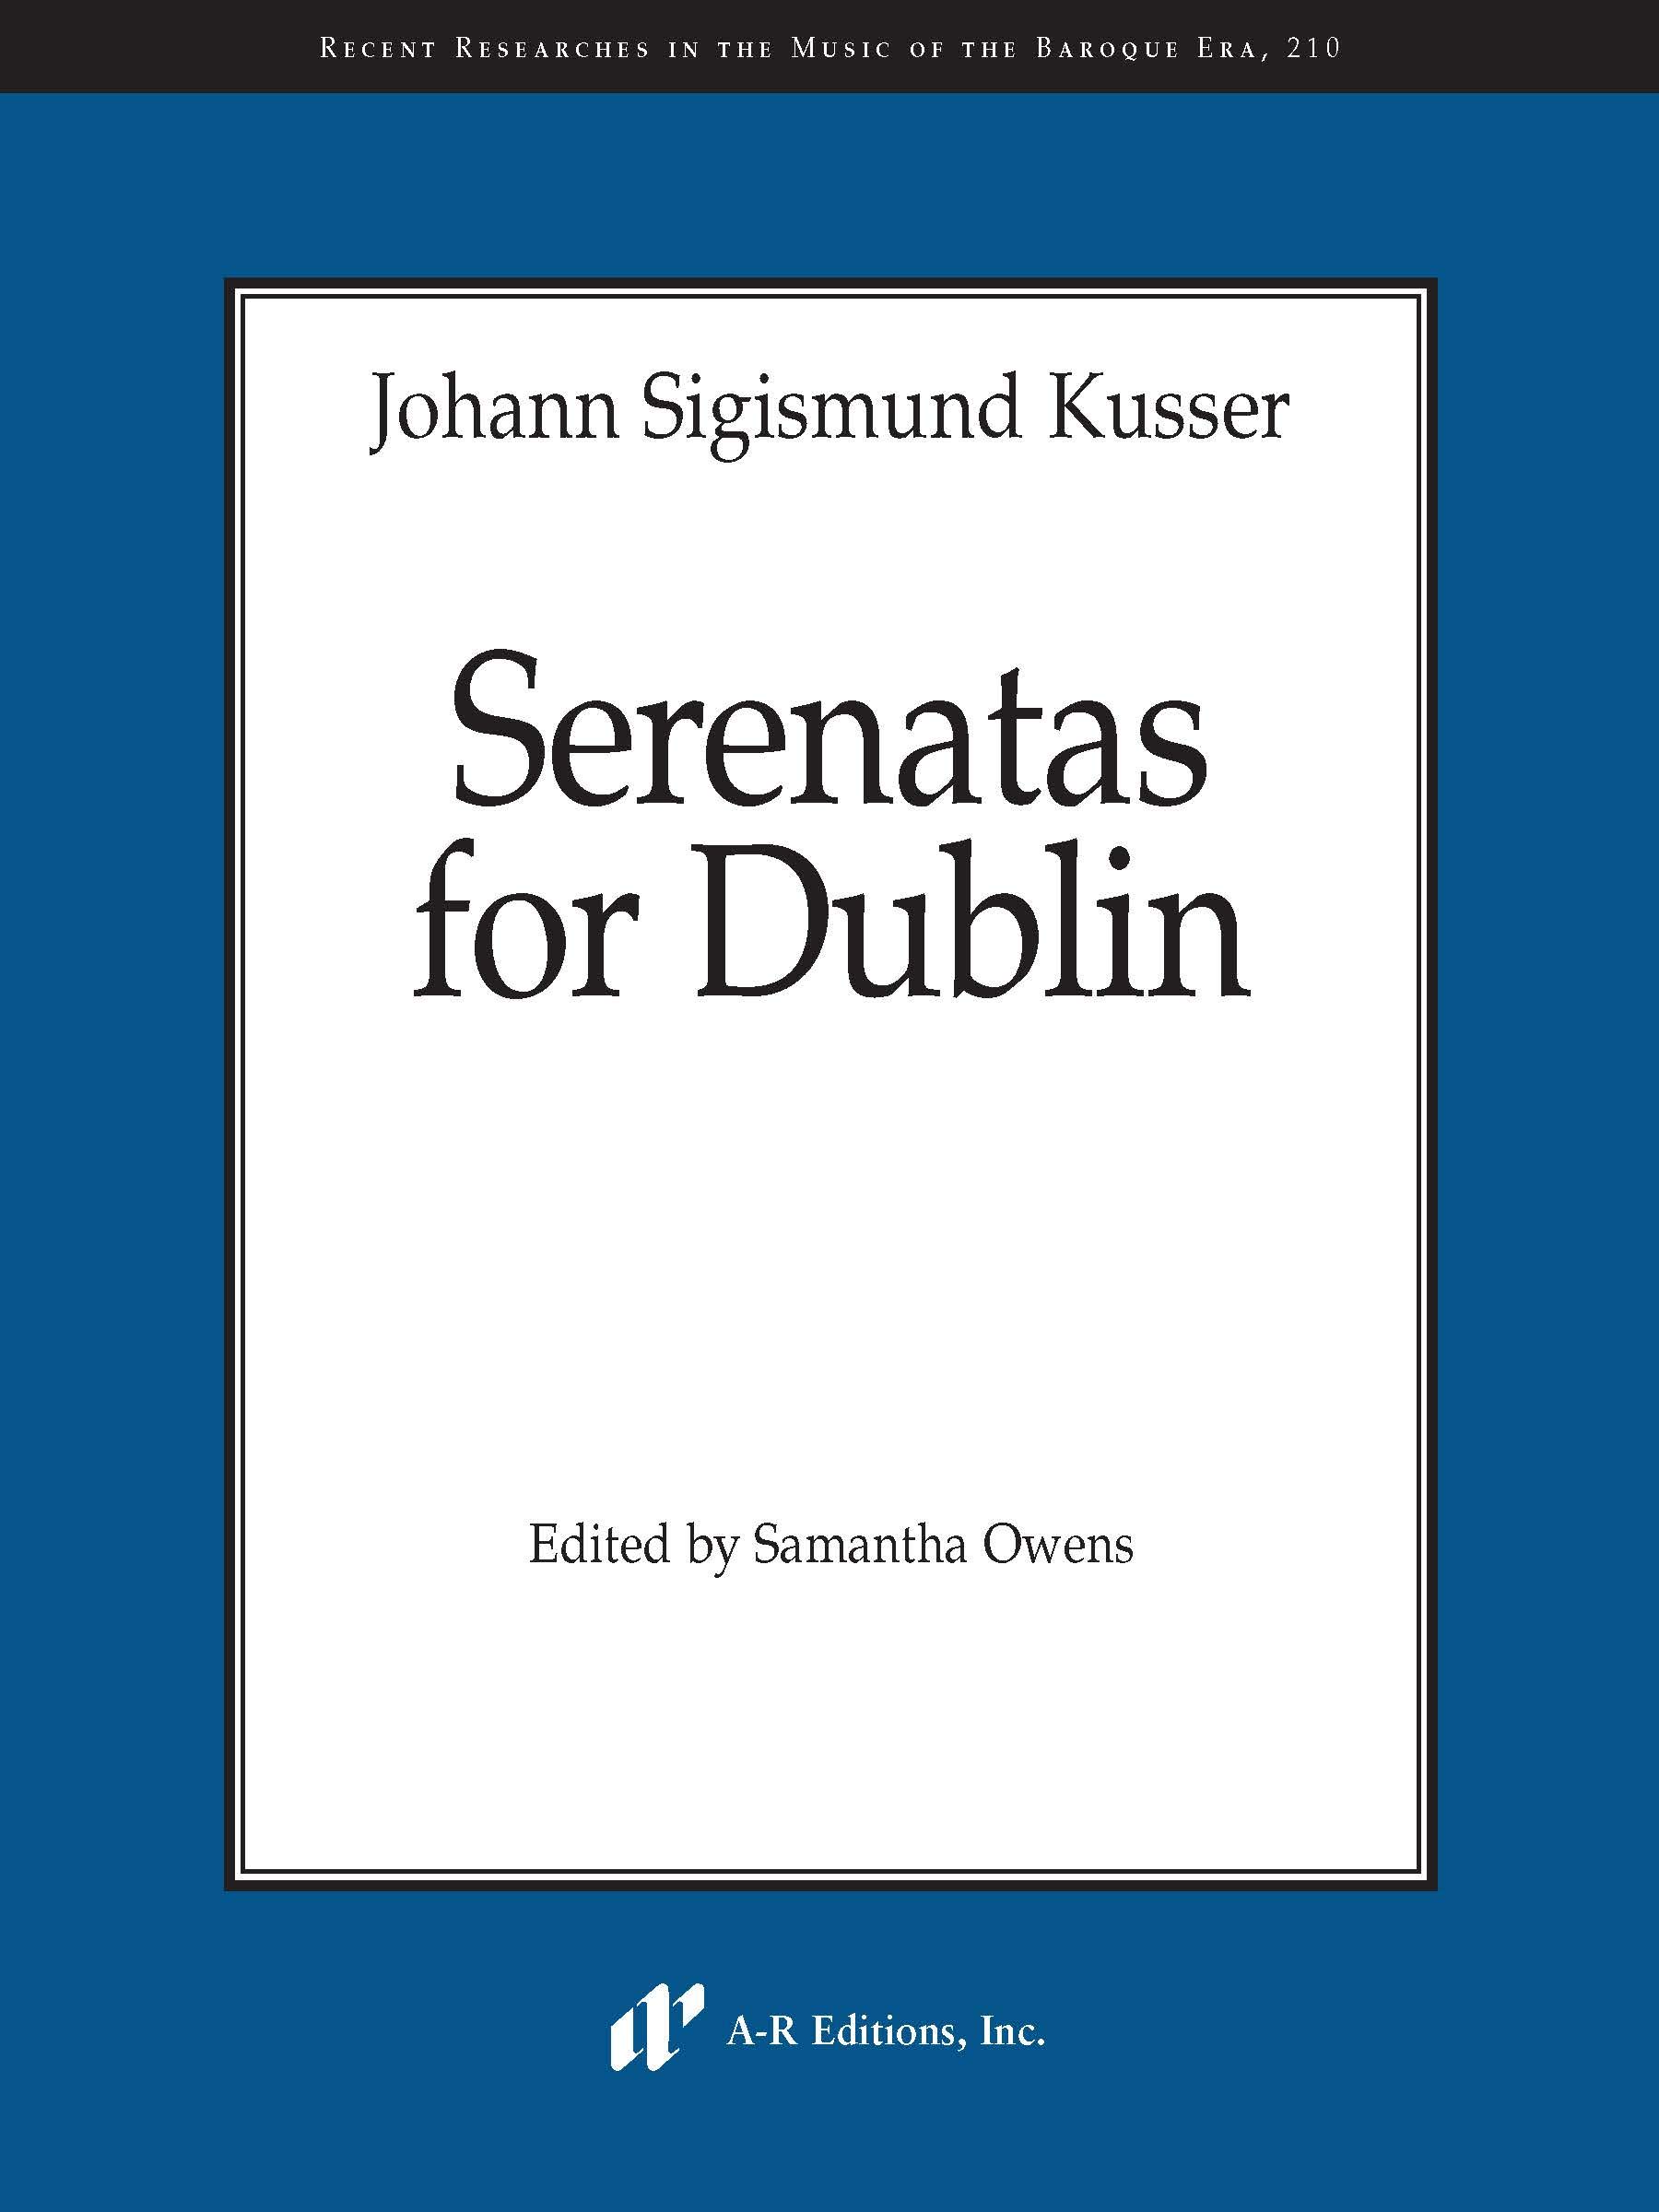 Kusser Serenatas for Dublin ed Samantha Owens